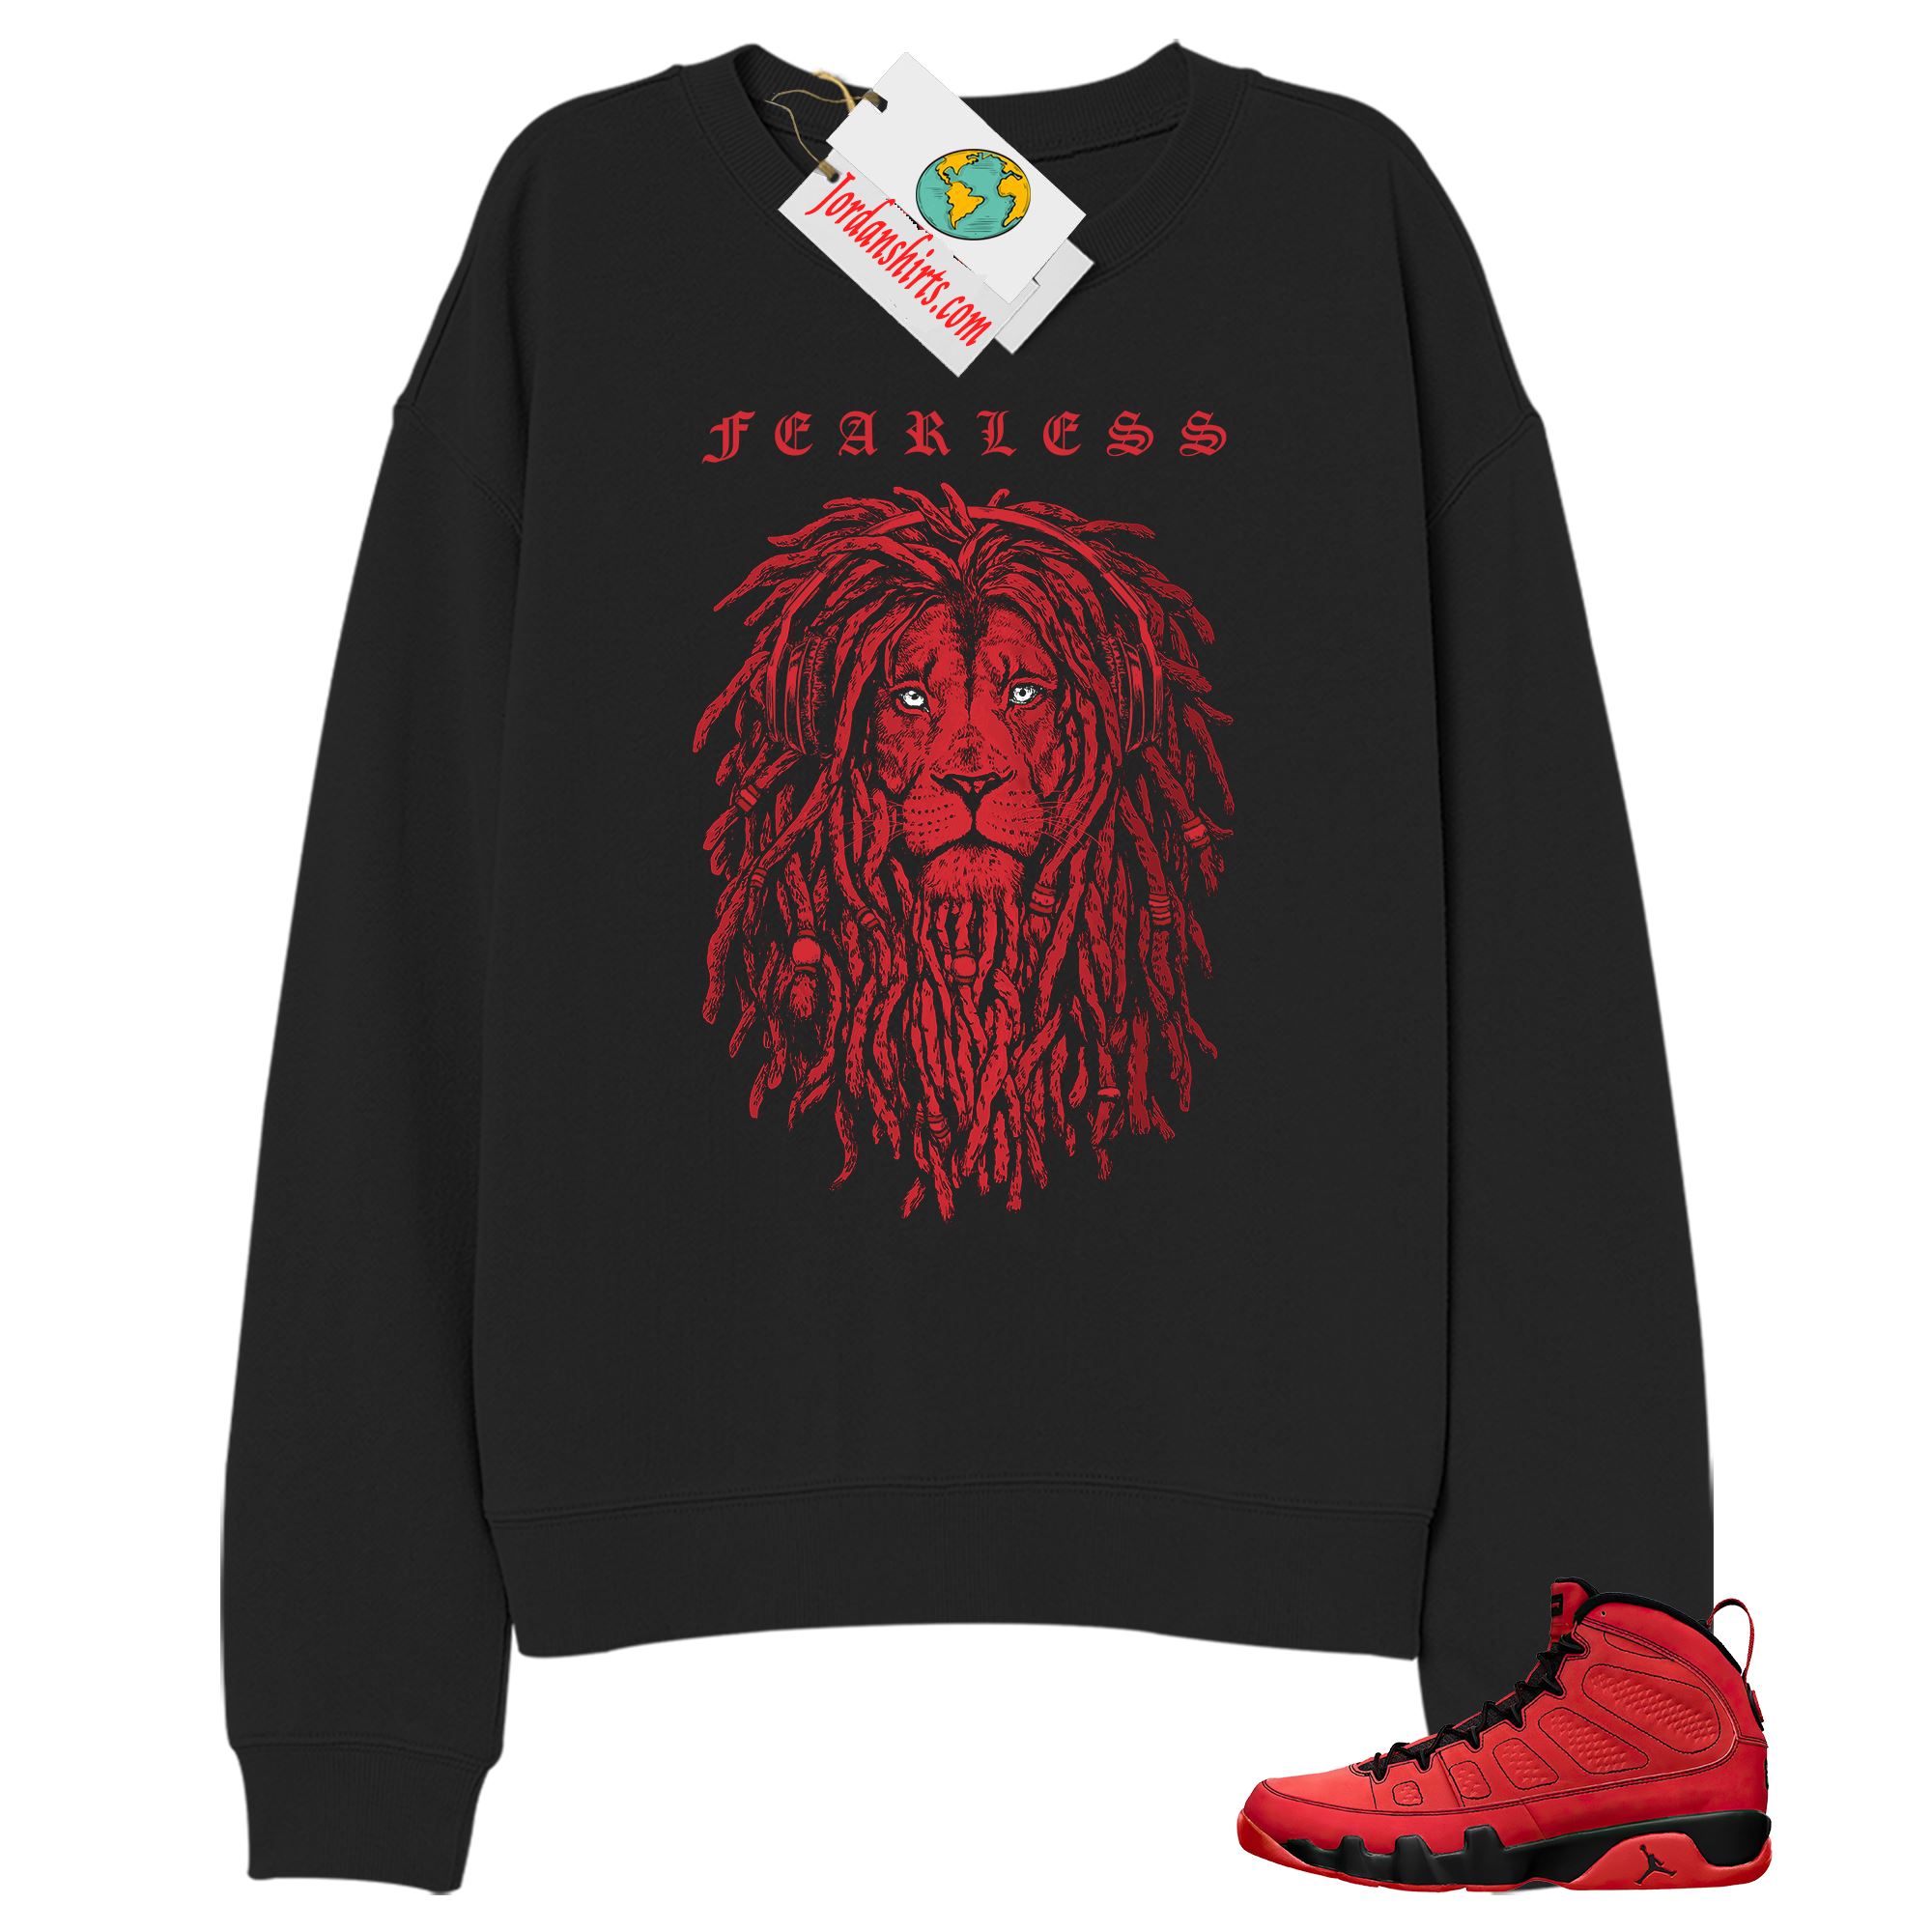 Jordan 9 Sweatshirt, Fearless Lion Black Sweatshirt Air Jordan 9 Chile Red 9s Size Up To 5xl